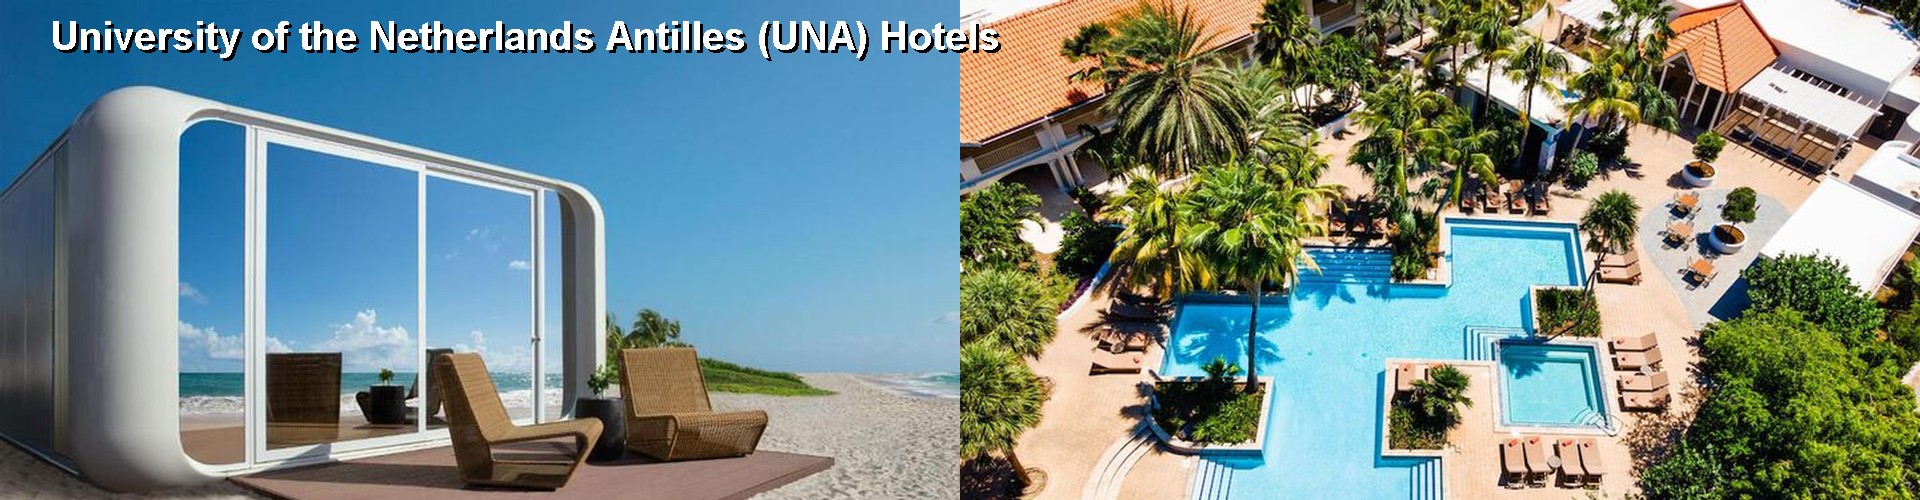 5 Best Hotels near University of the Netherlands Antilles (UNA)